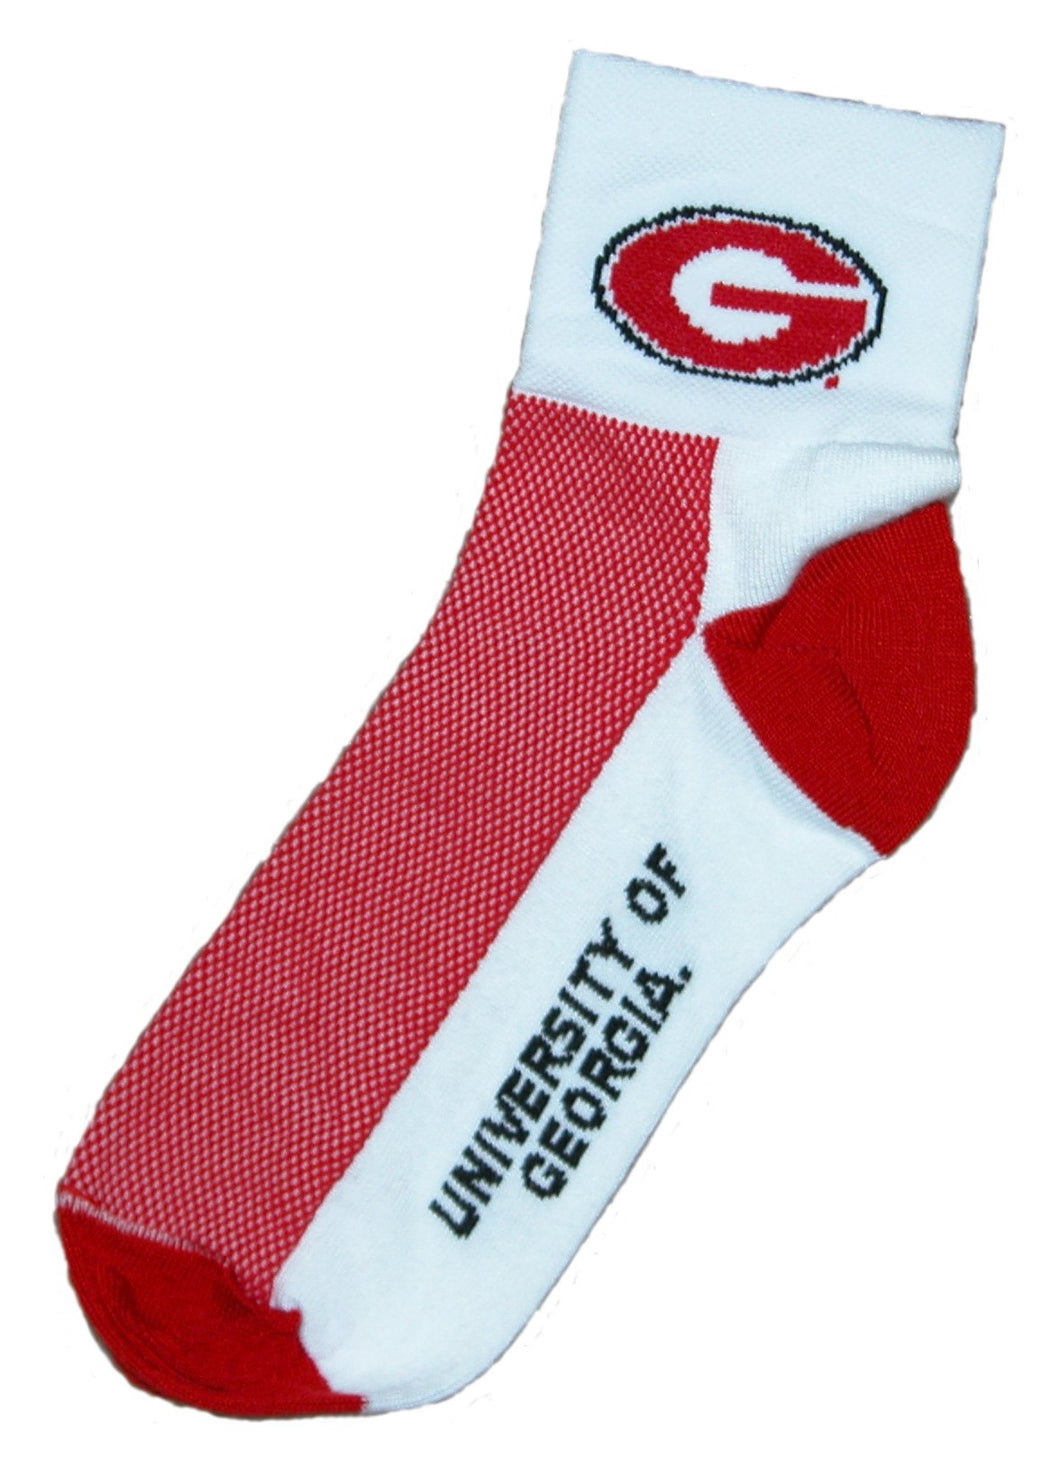 Performance Socks - Georgia Bulldogs - Closeout (reg $14.99)